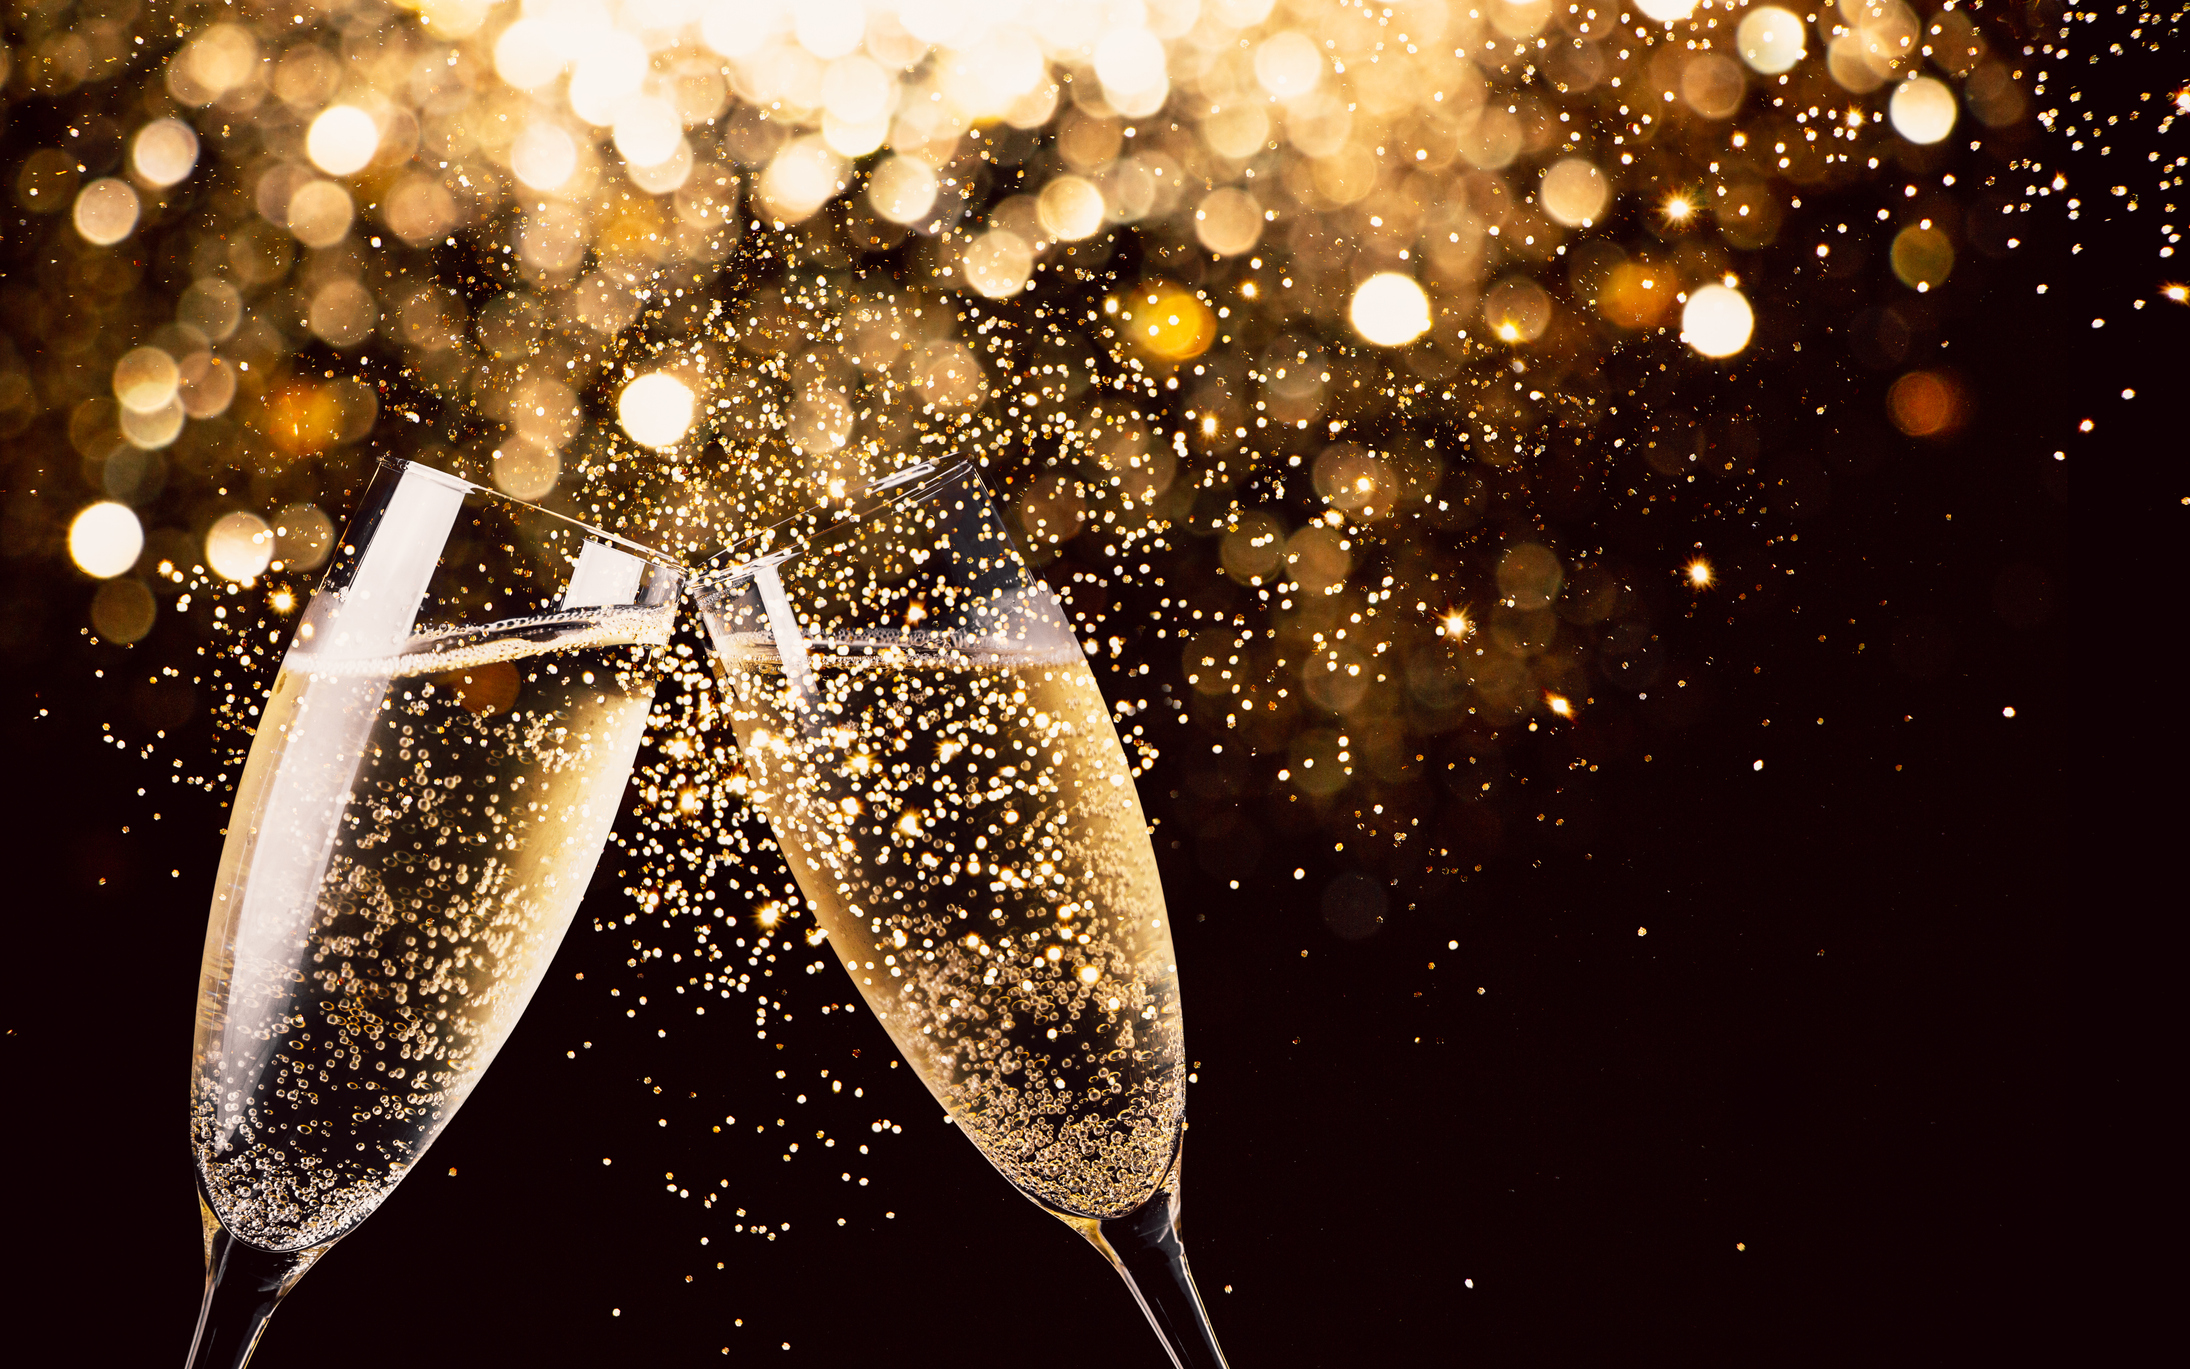 New Year celebration toast of Champagne